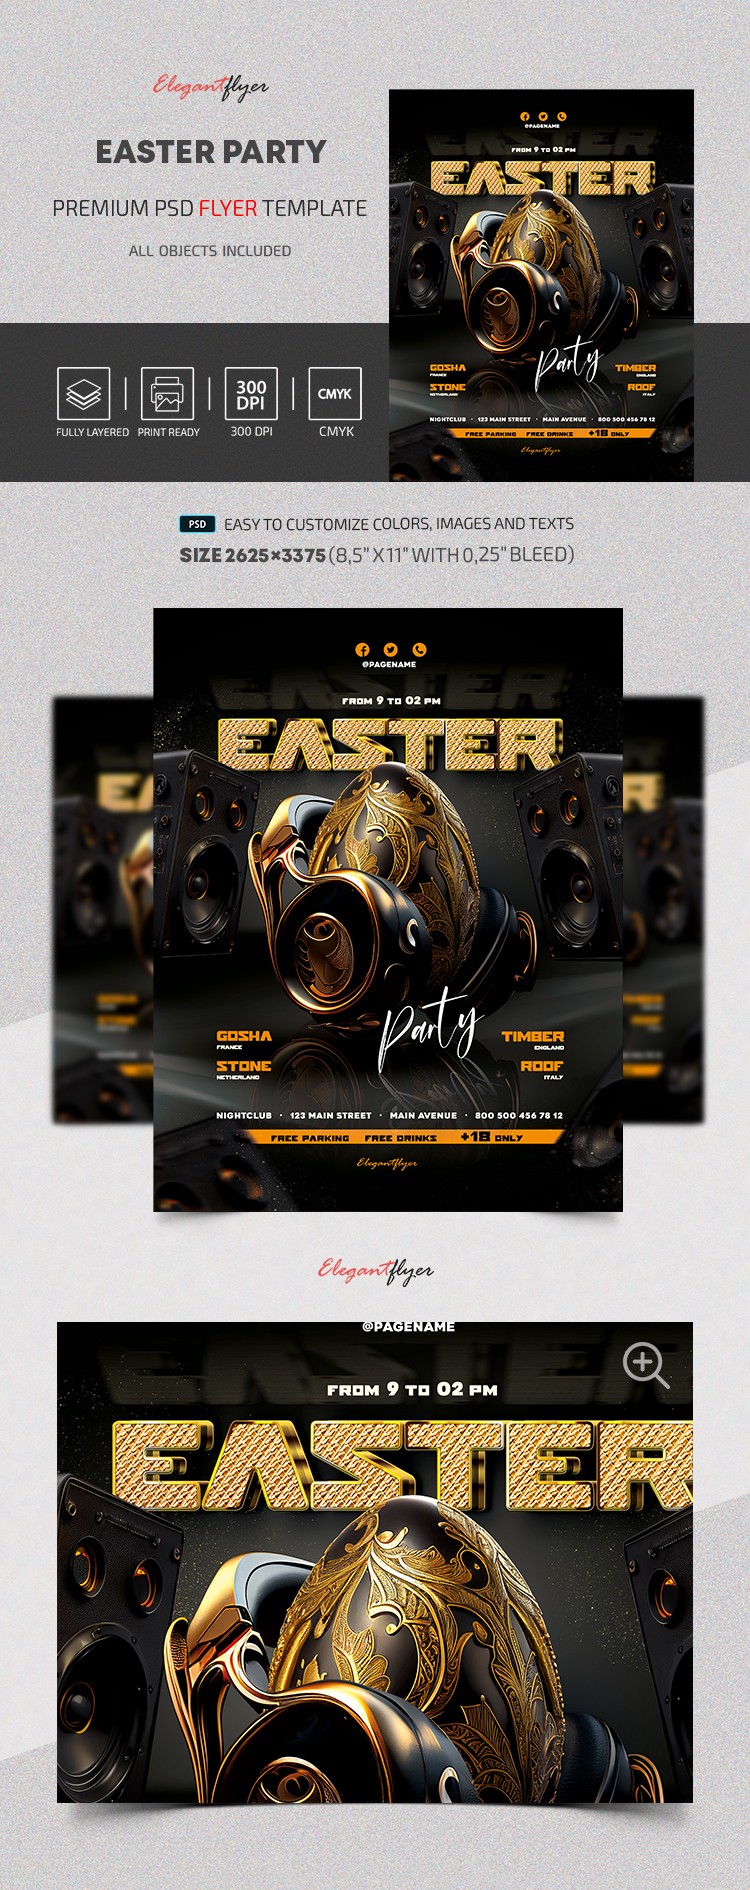 Easter Party - Premium PSD Flyer Template by ElegantFlyer